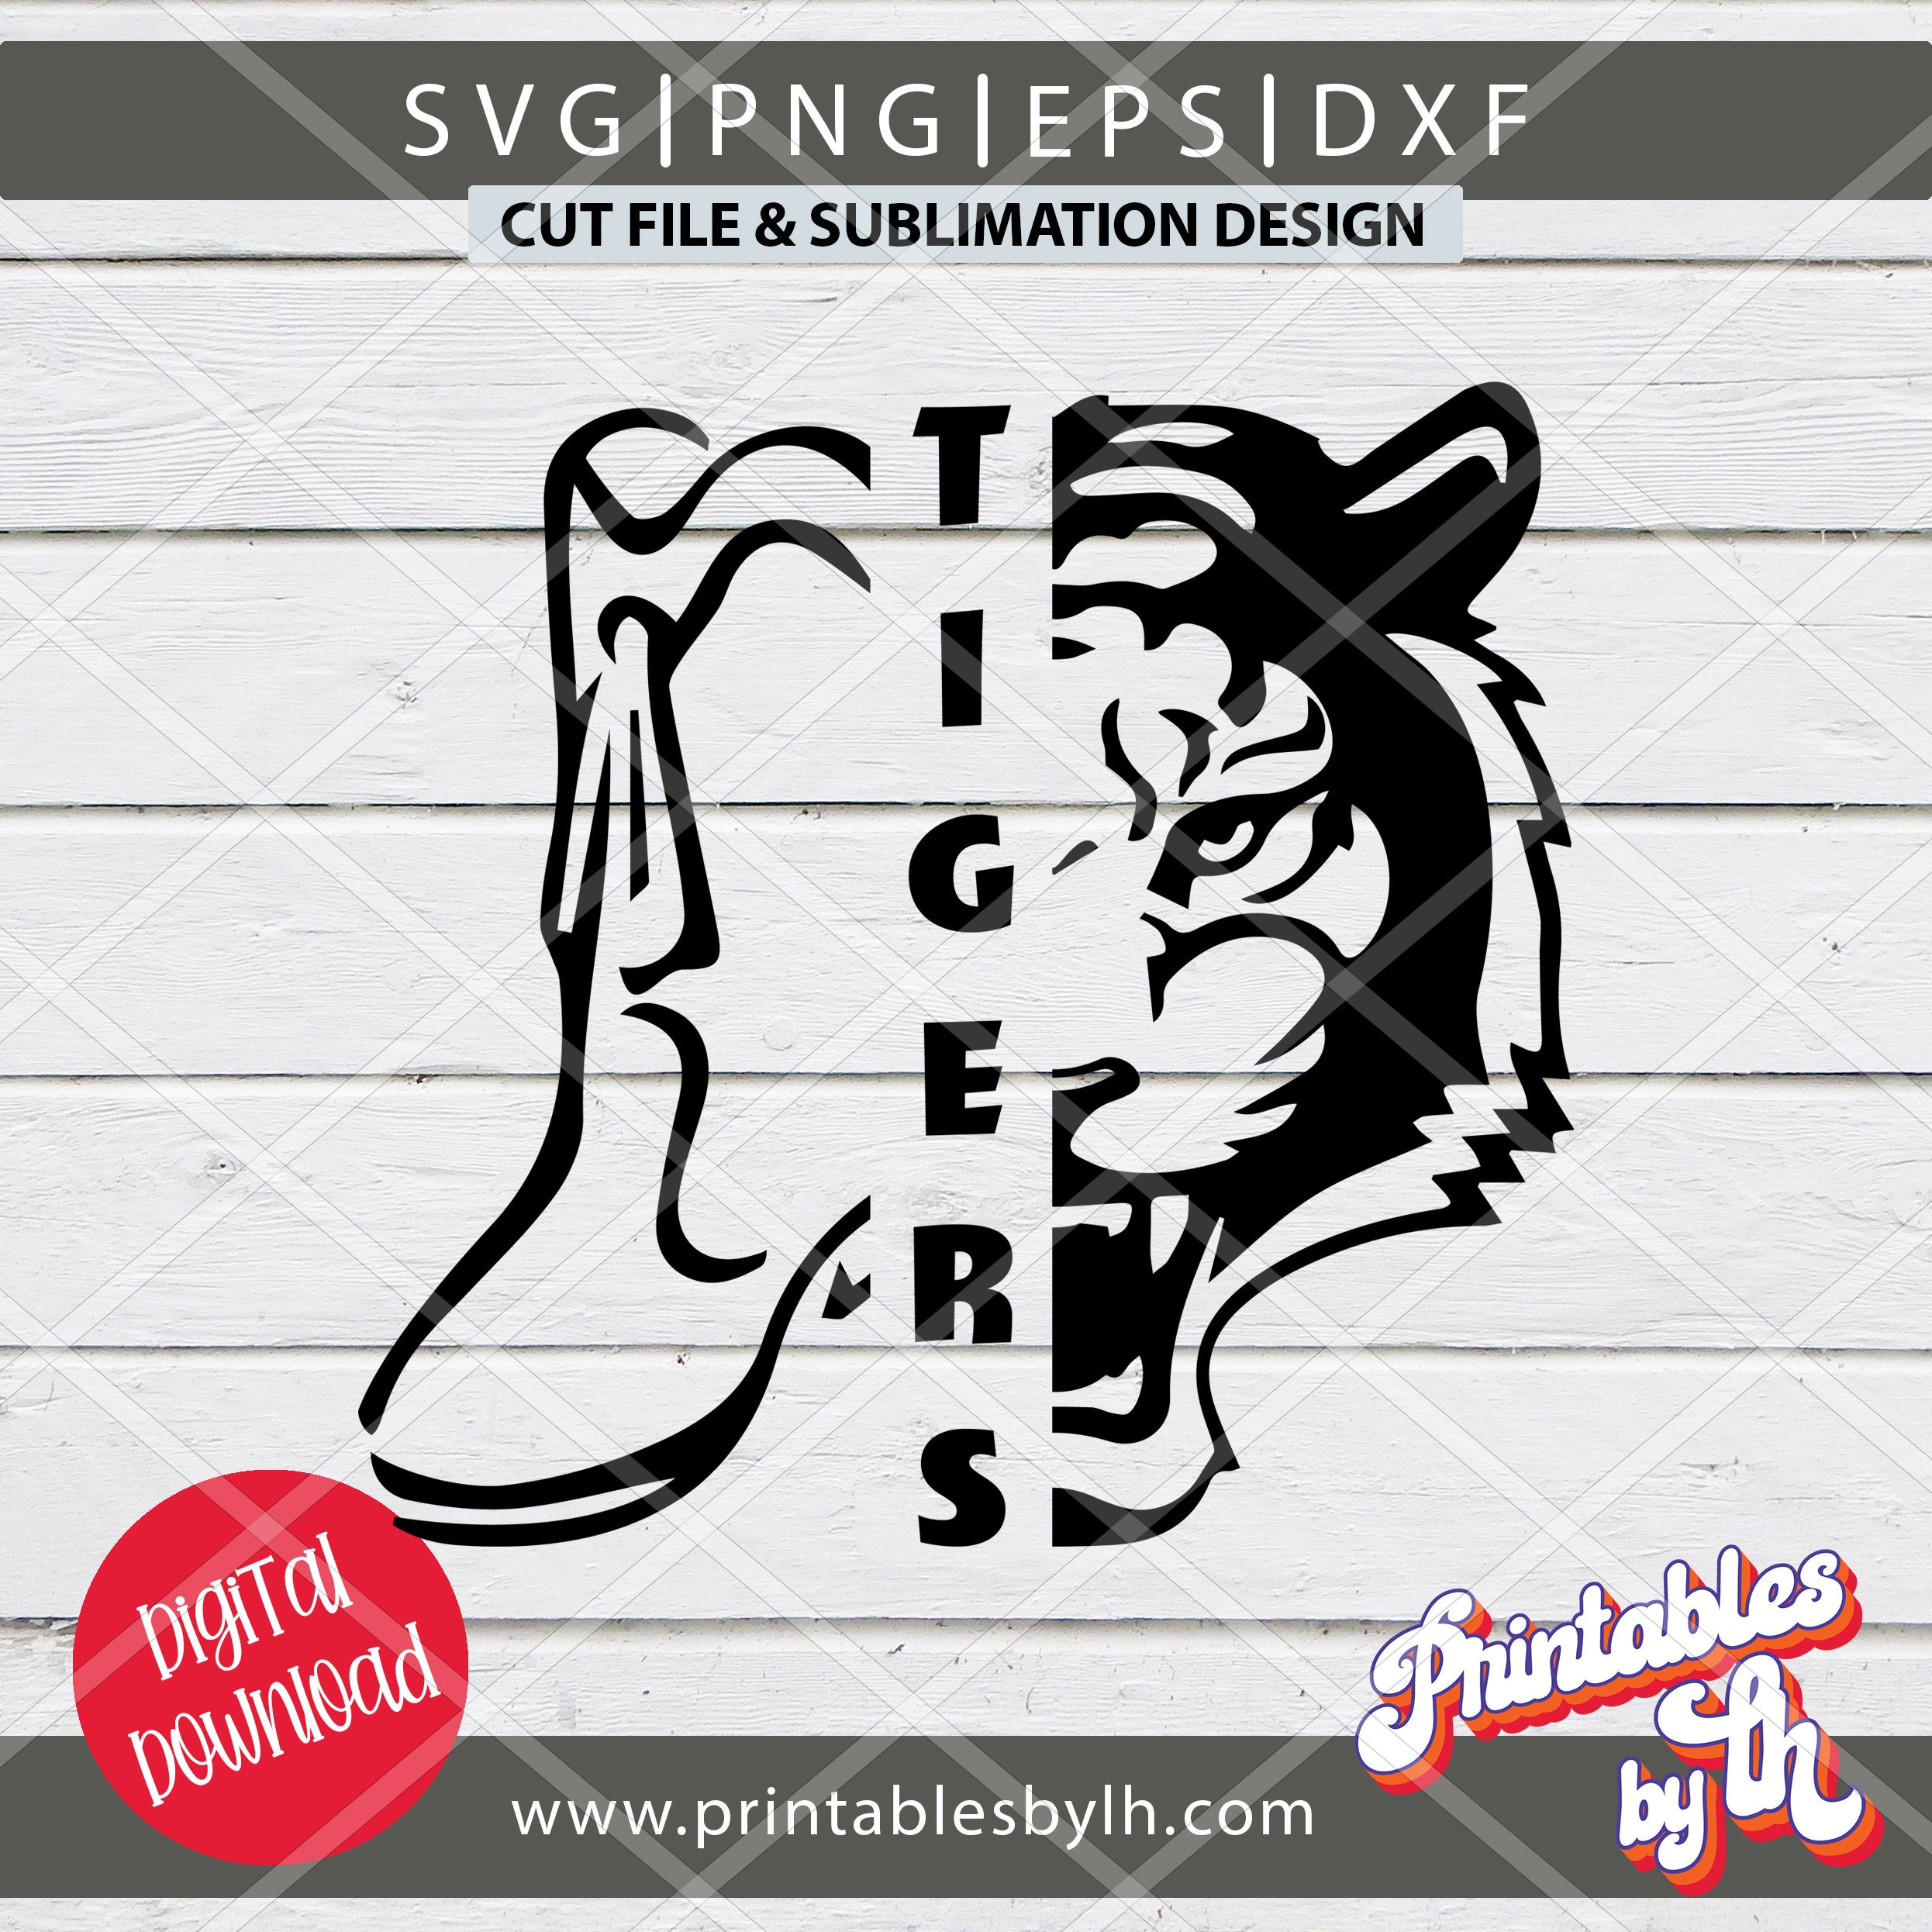 Tigers Majorette Svg Tigers Drill Team Boots SVG Tigers SVG Tigers Dance Team Svg,Cricut Cut Files,Silhouette Cut Files,Cutting Files